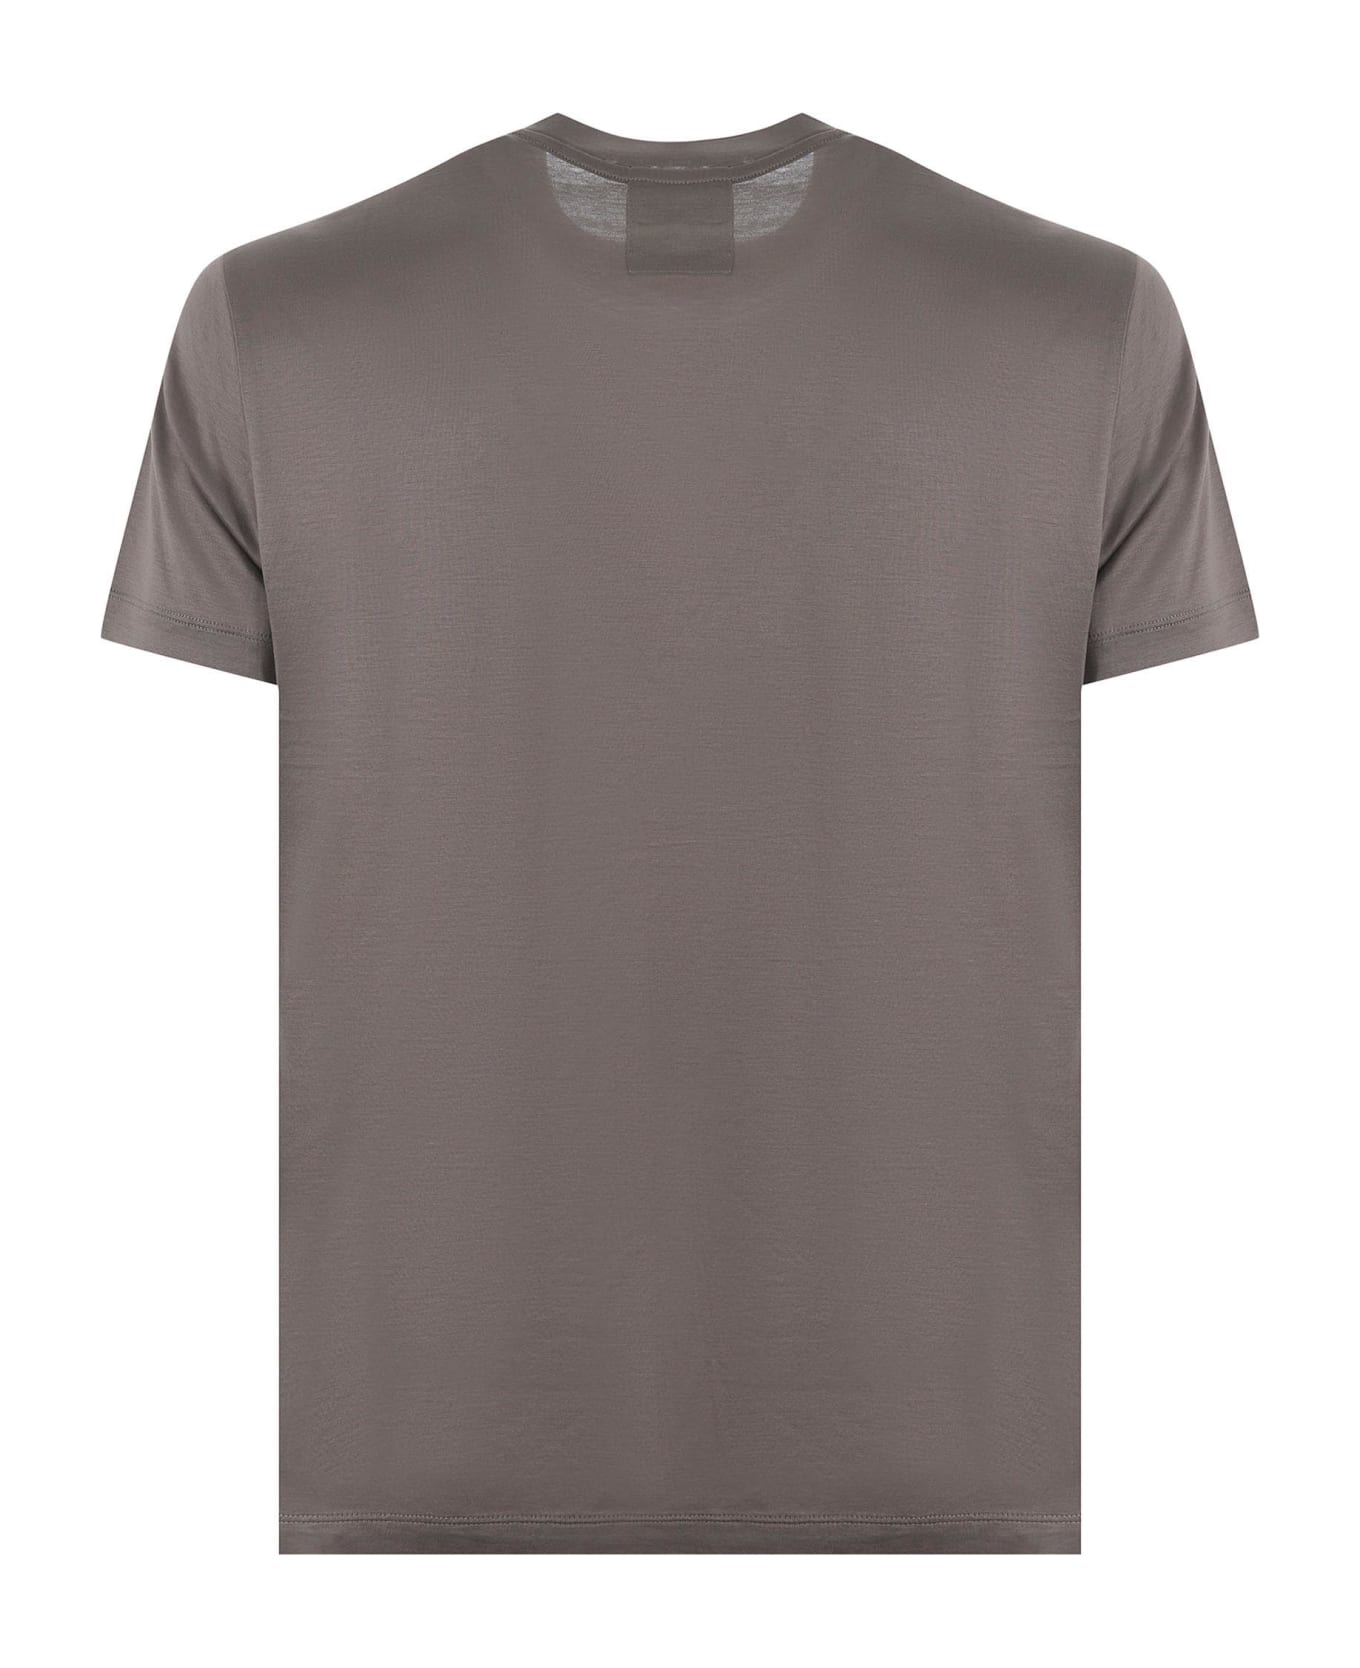 Emporio Armani T-shirt - Tortora scuro シャツ